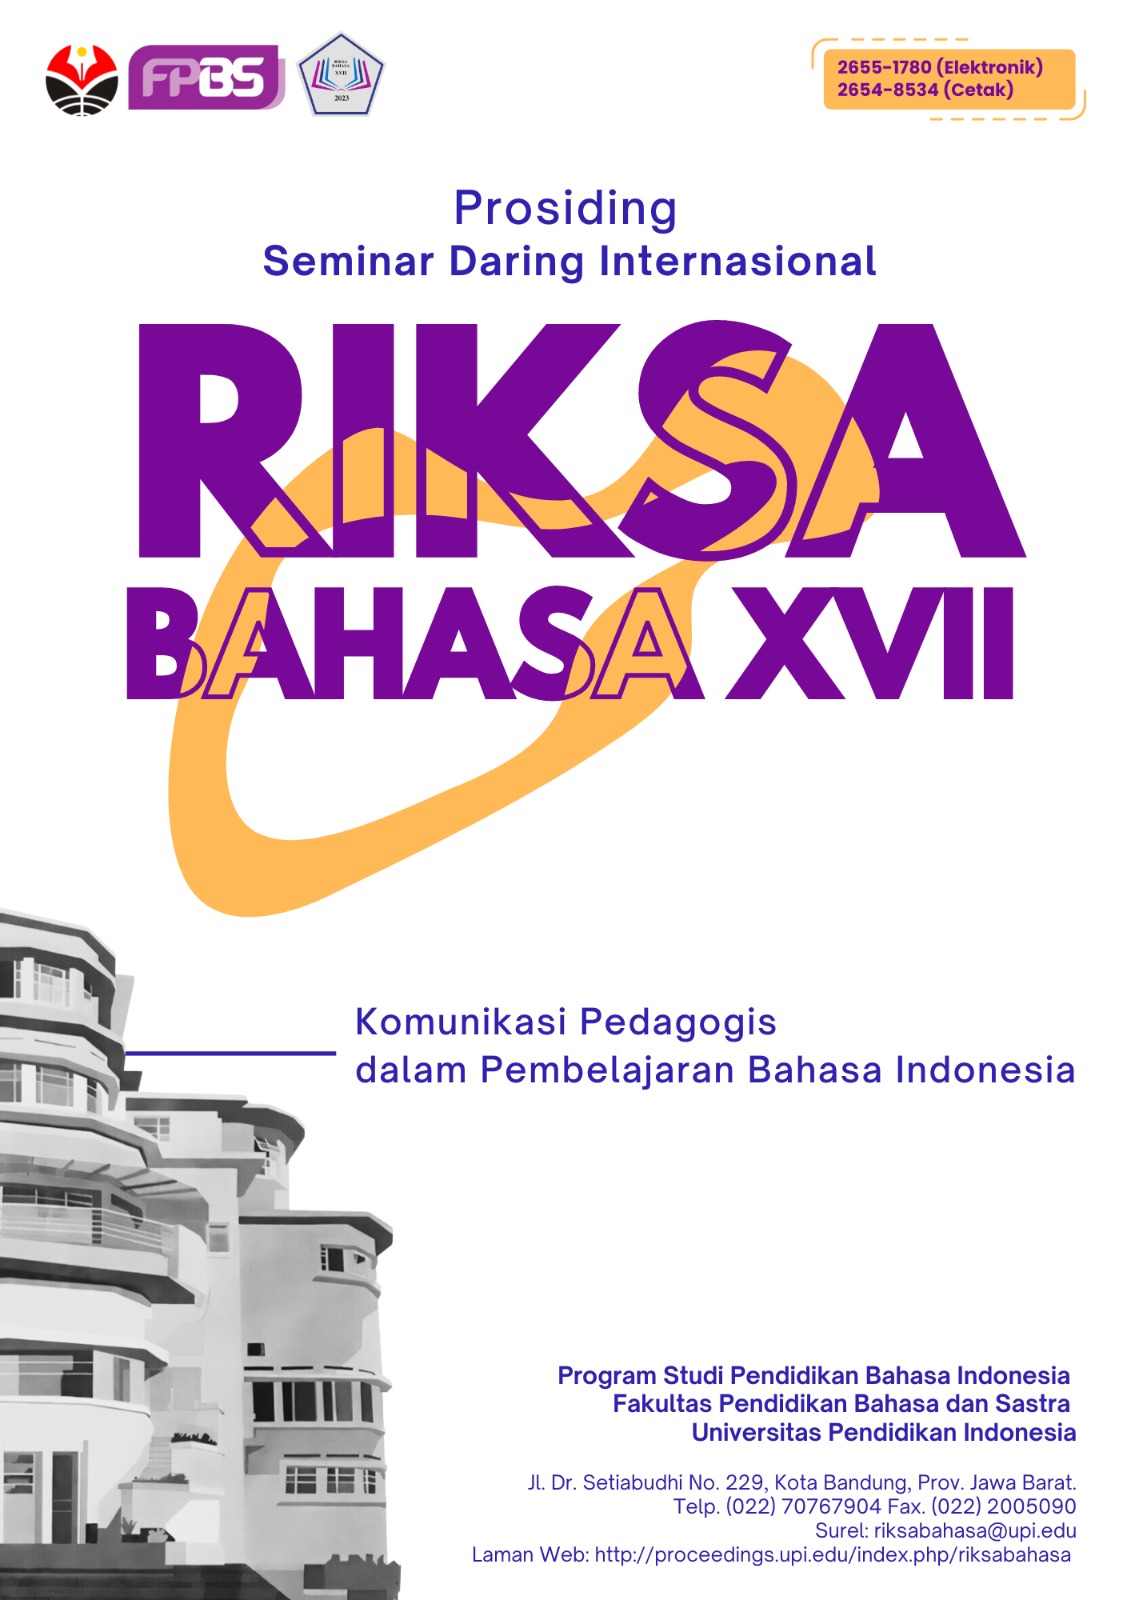 Seminar Internasional Riksa Bahasa XII